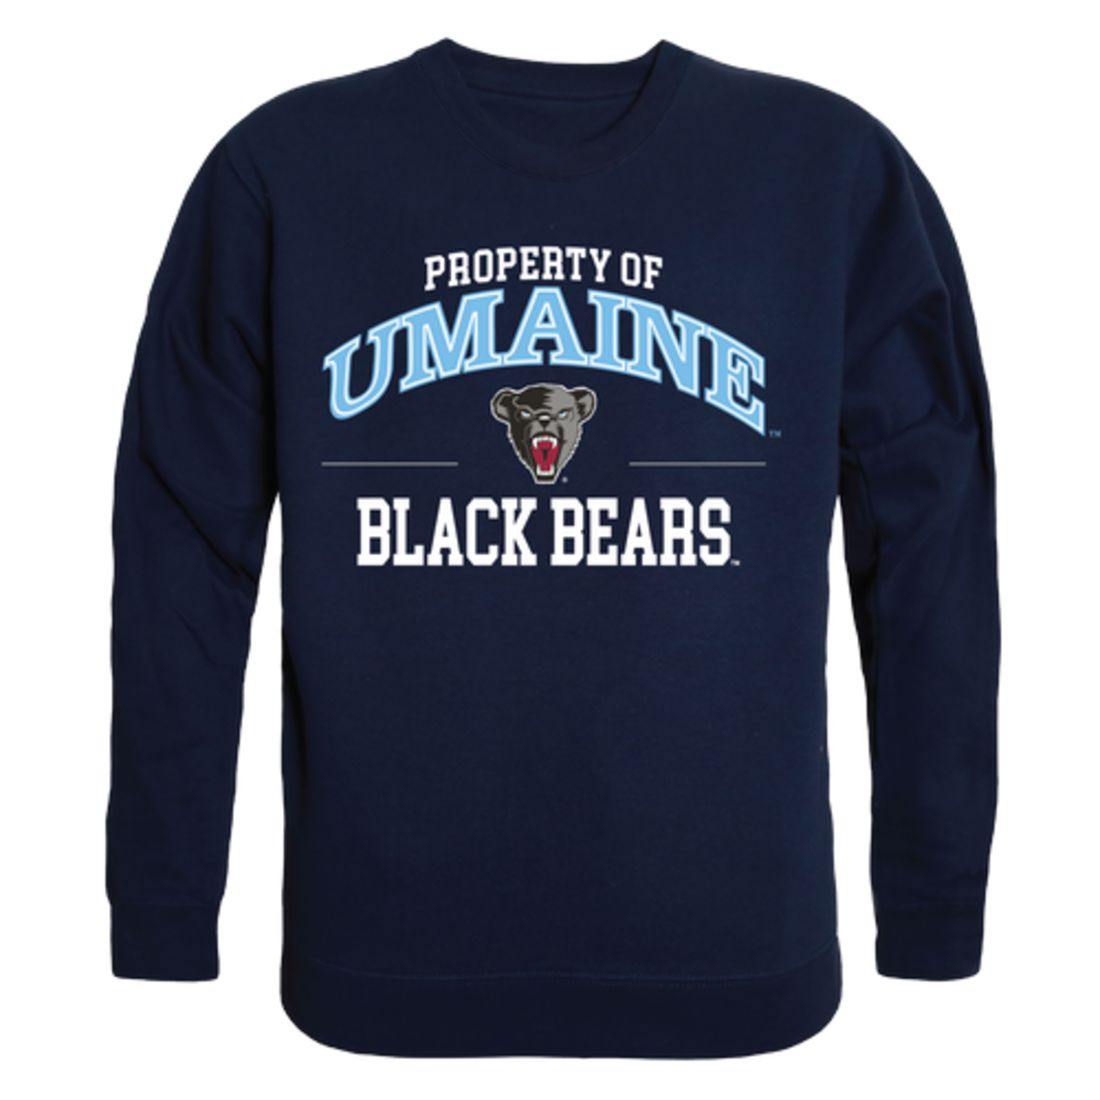 UMaine University of Maine BlackBears Property Crewneck Pullover Sweatshirt Sweater Navy-Campus-Wardrobe